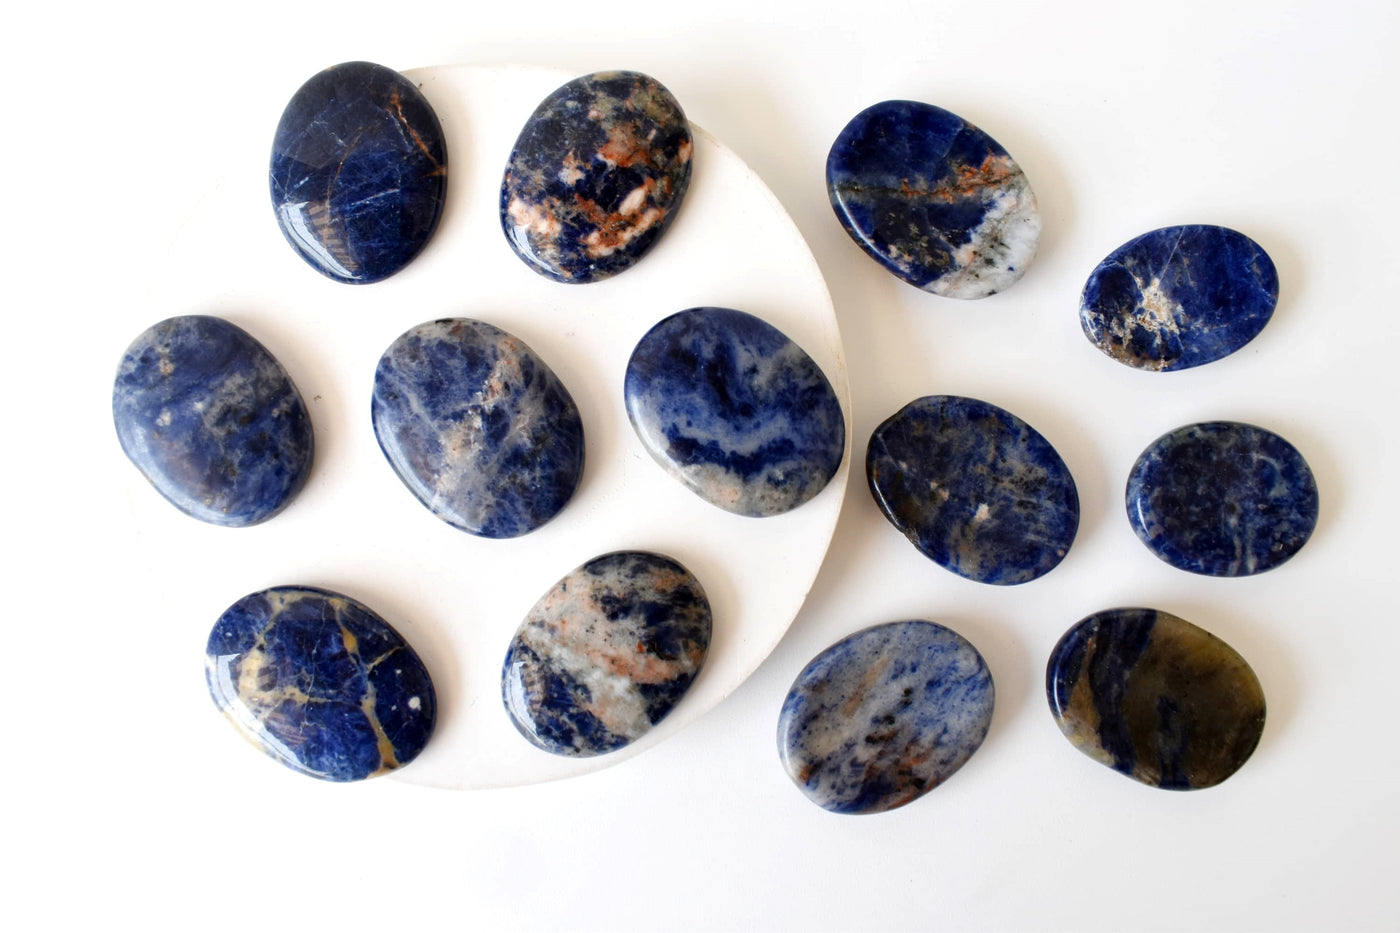 Sodalite Pocket Stones (Meditation and Self-Acceptance)